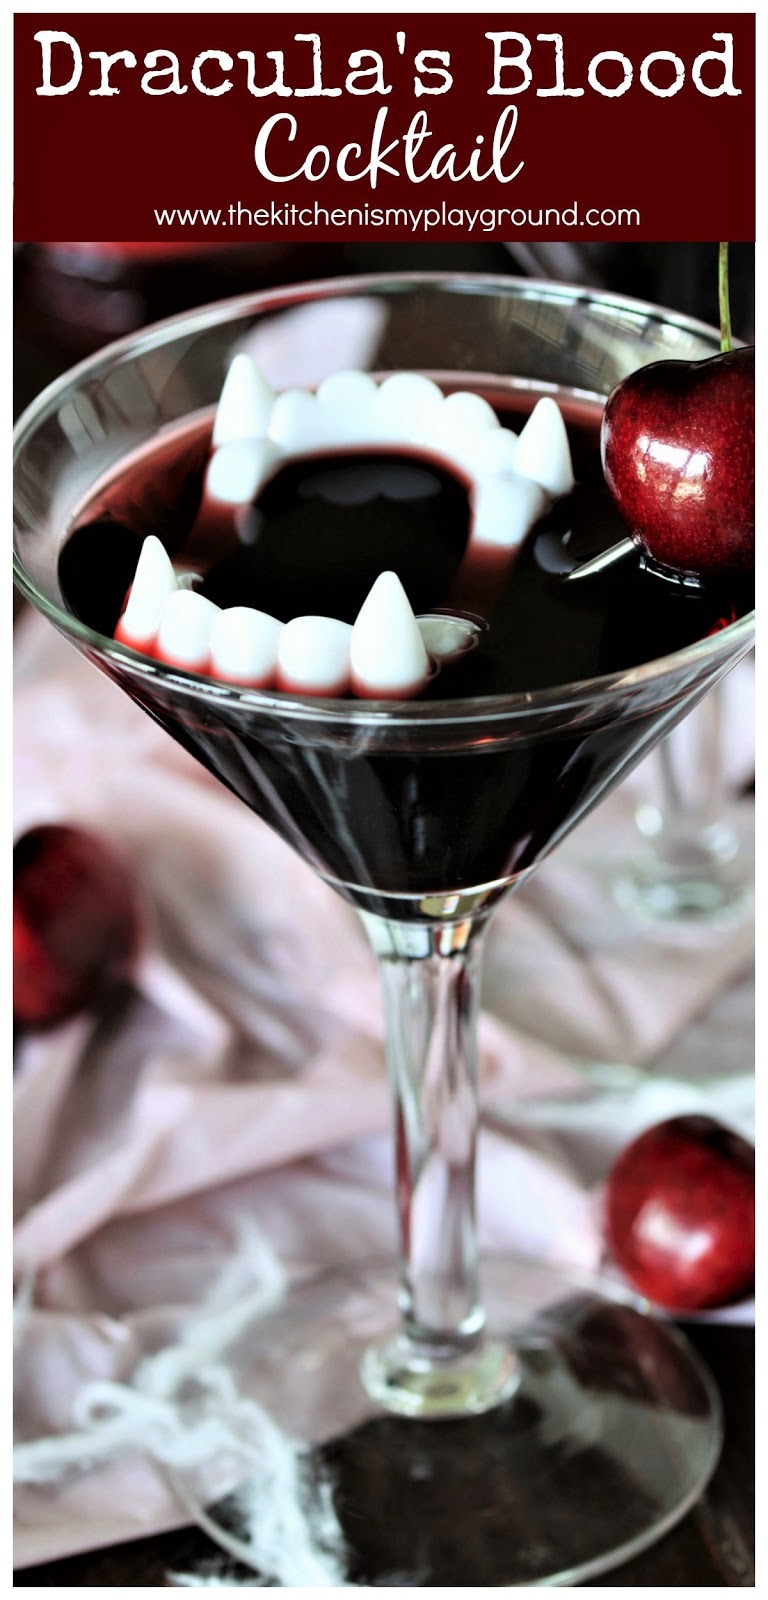 https://1.bp.blogspot.com/-yrlpJVlWDQY/XaPieWPlKwI/AAAAAAAAux4/fdWCh5SVONcHcT4IXO2VrAvcSPxobaC8QCLcBGAsYHQ/s1600/Draculas-Blood-Cocktail-for-Halloween-Image.jpg